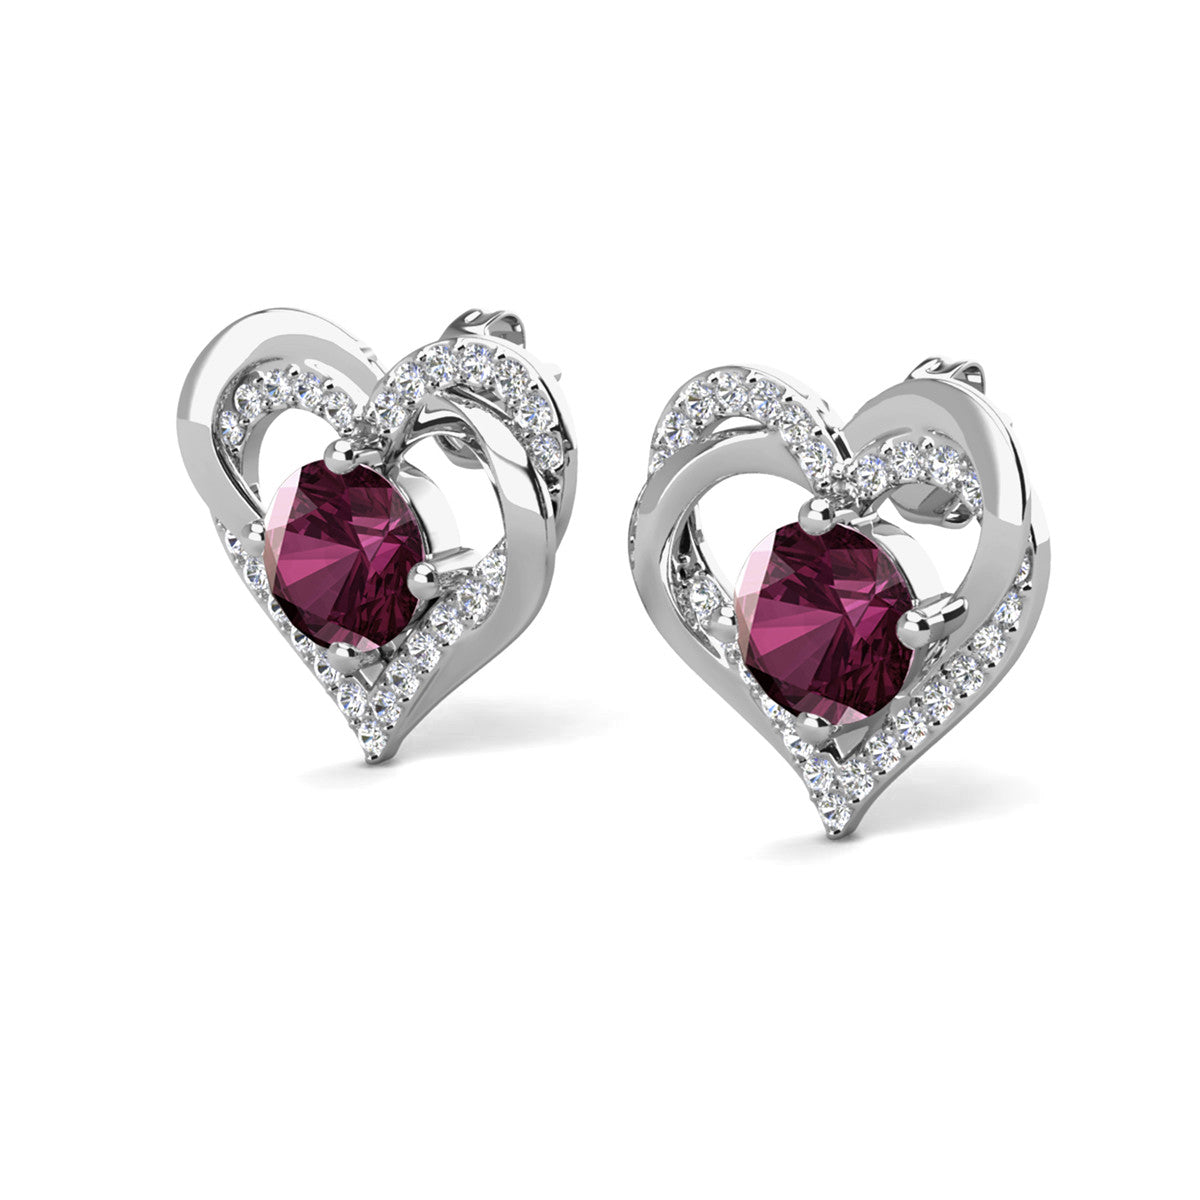 Forever February Birthstone Amethyst Earrings, 18k White Gold Plated Silver Double Heart Crystal Earrings